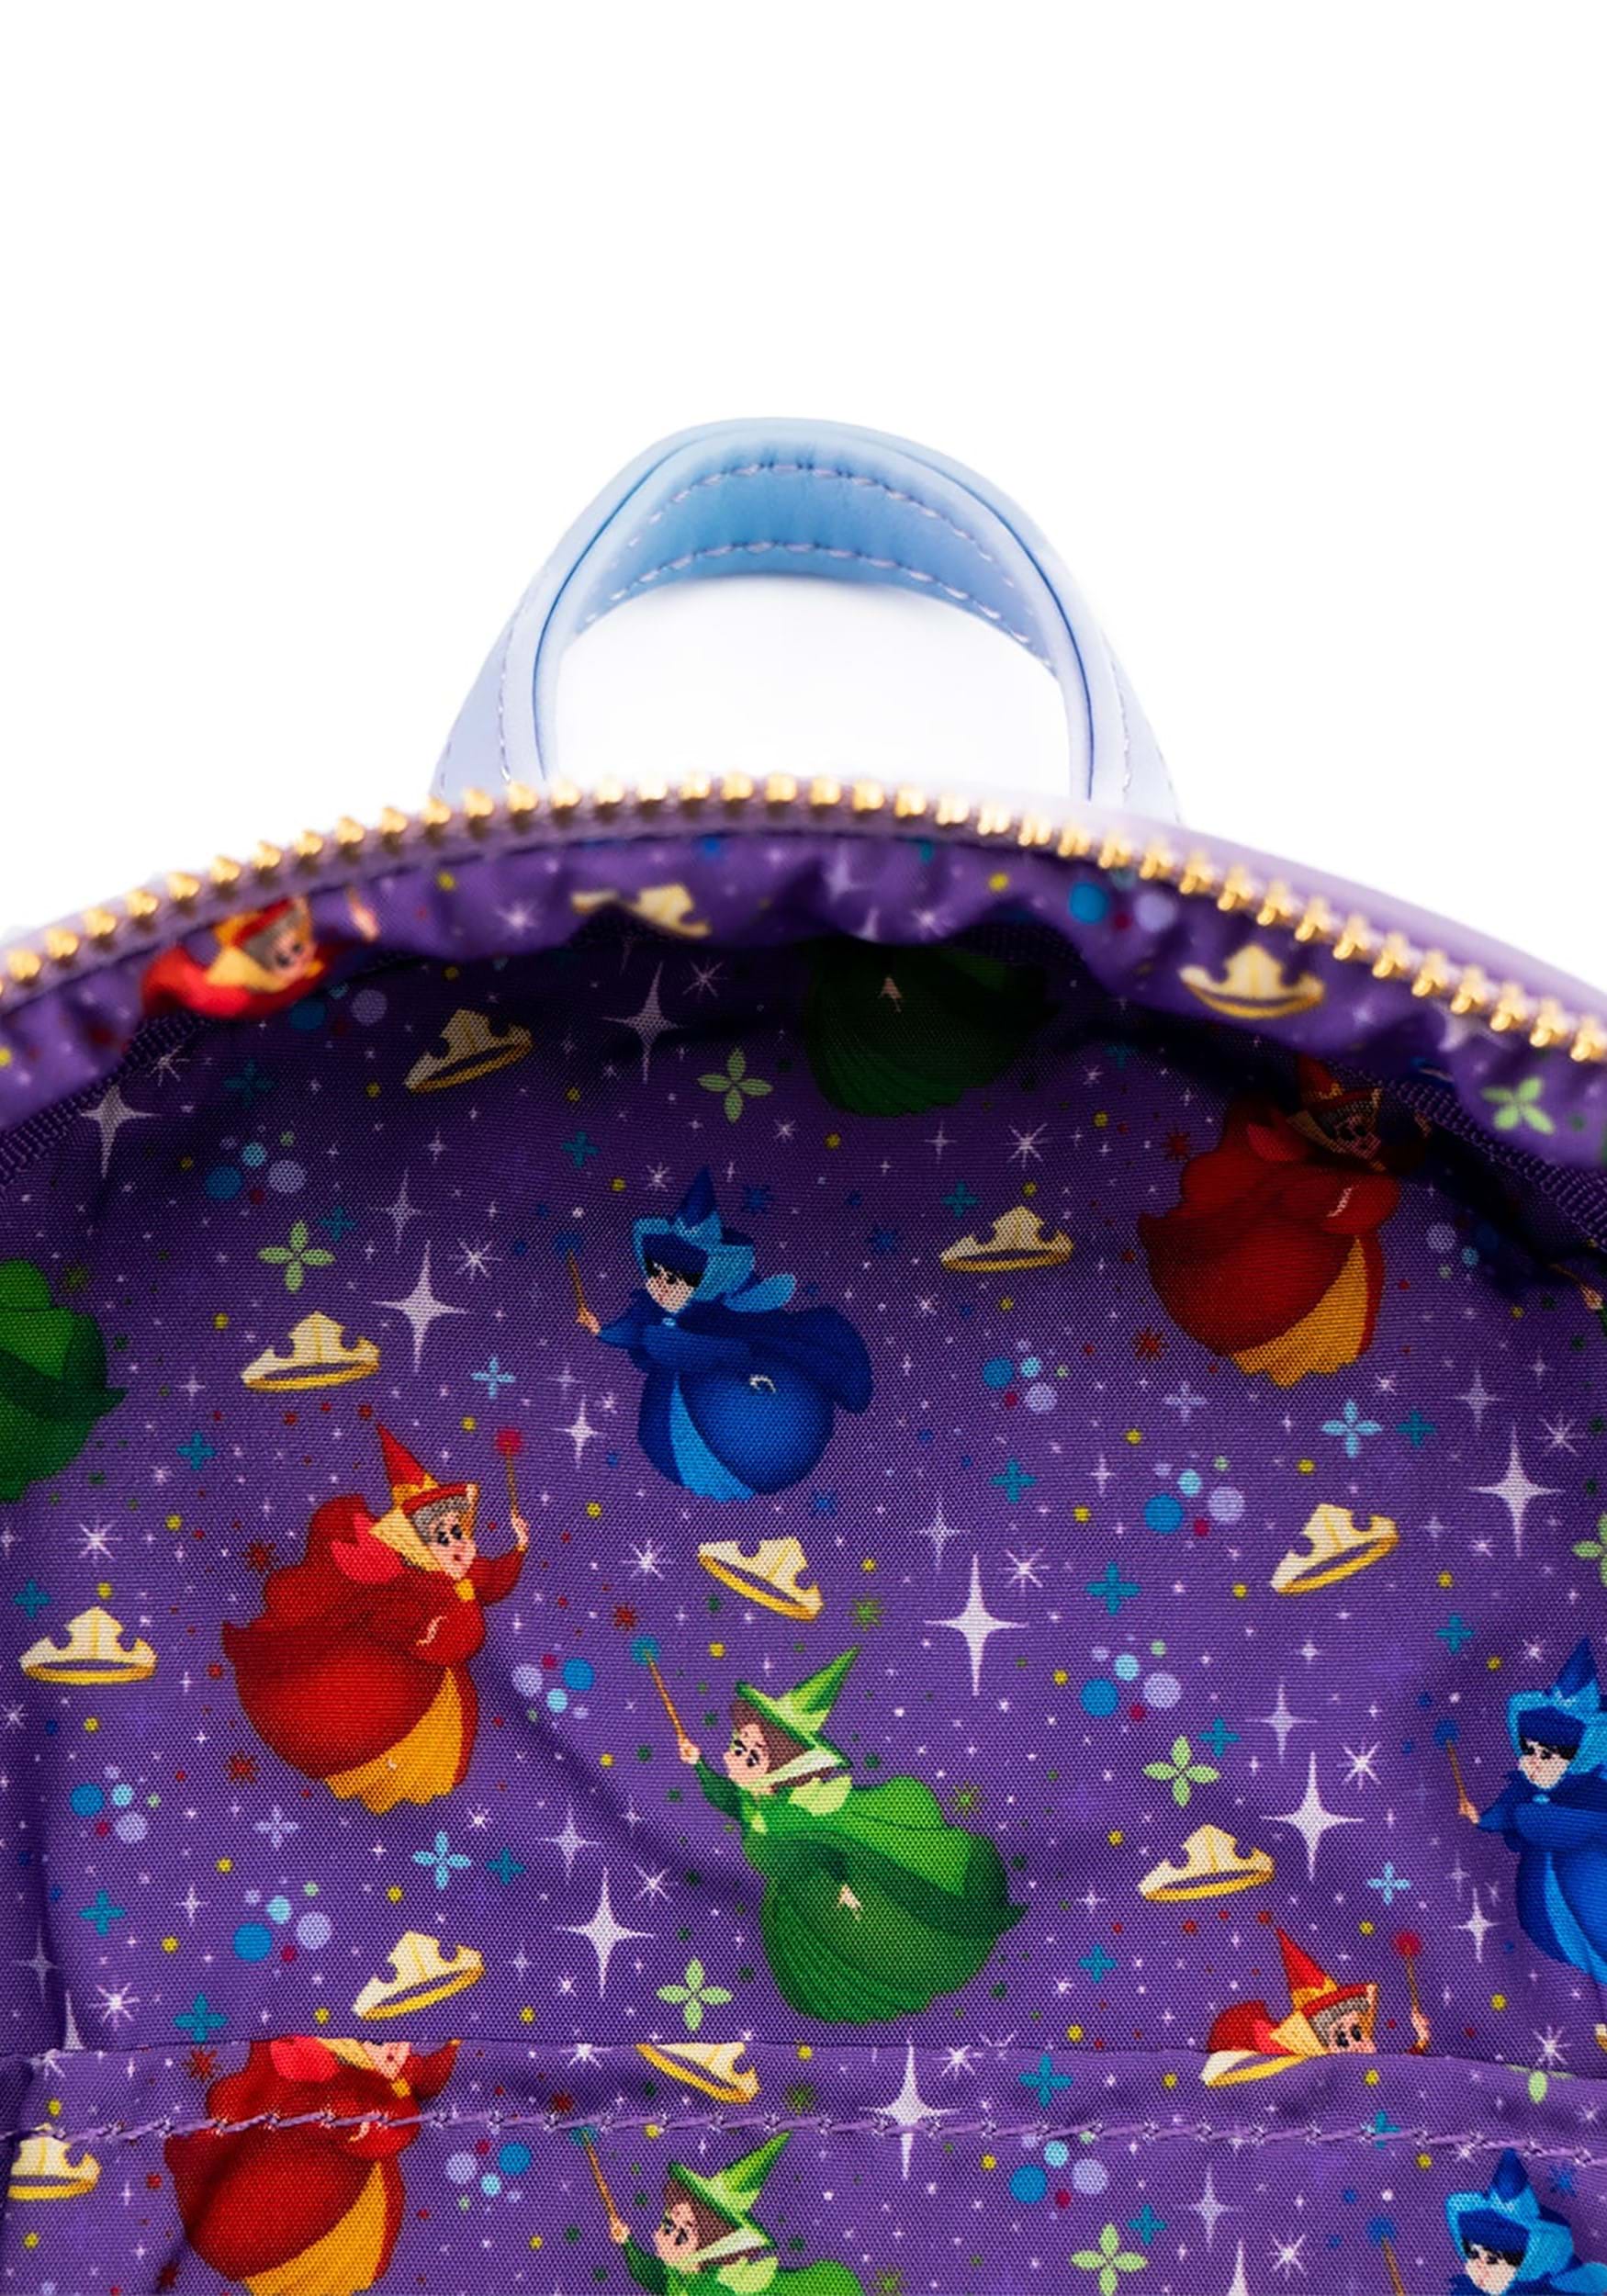 Loungefly Disney Princess Stories Sleeping Beauty Aurora Mini Backpack  EXCLUSIVE